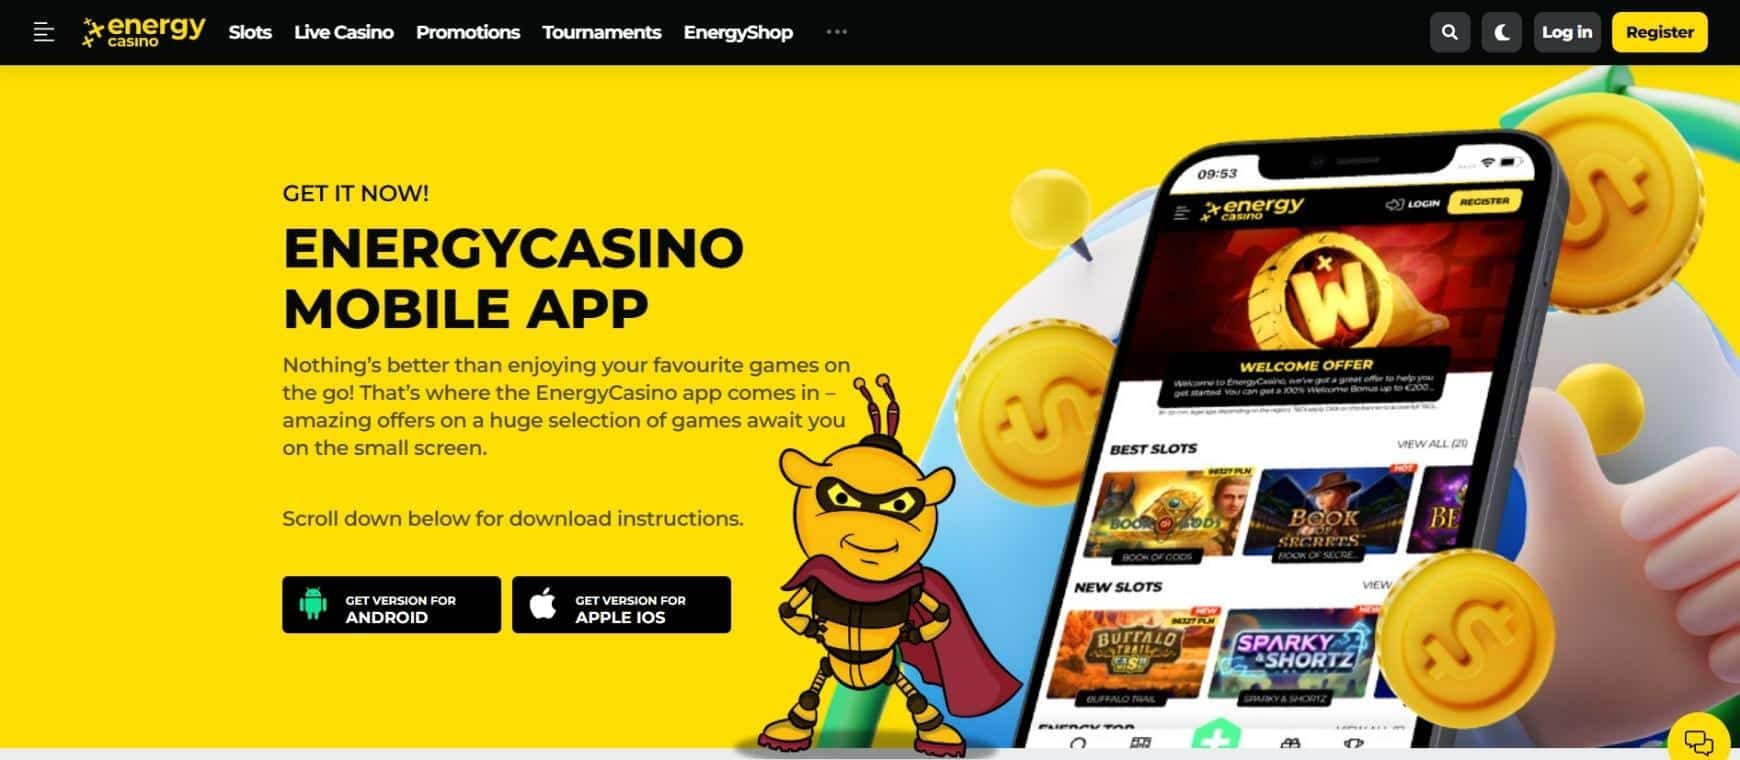 Energy Casino Mobile App
